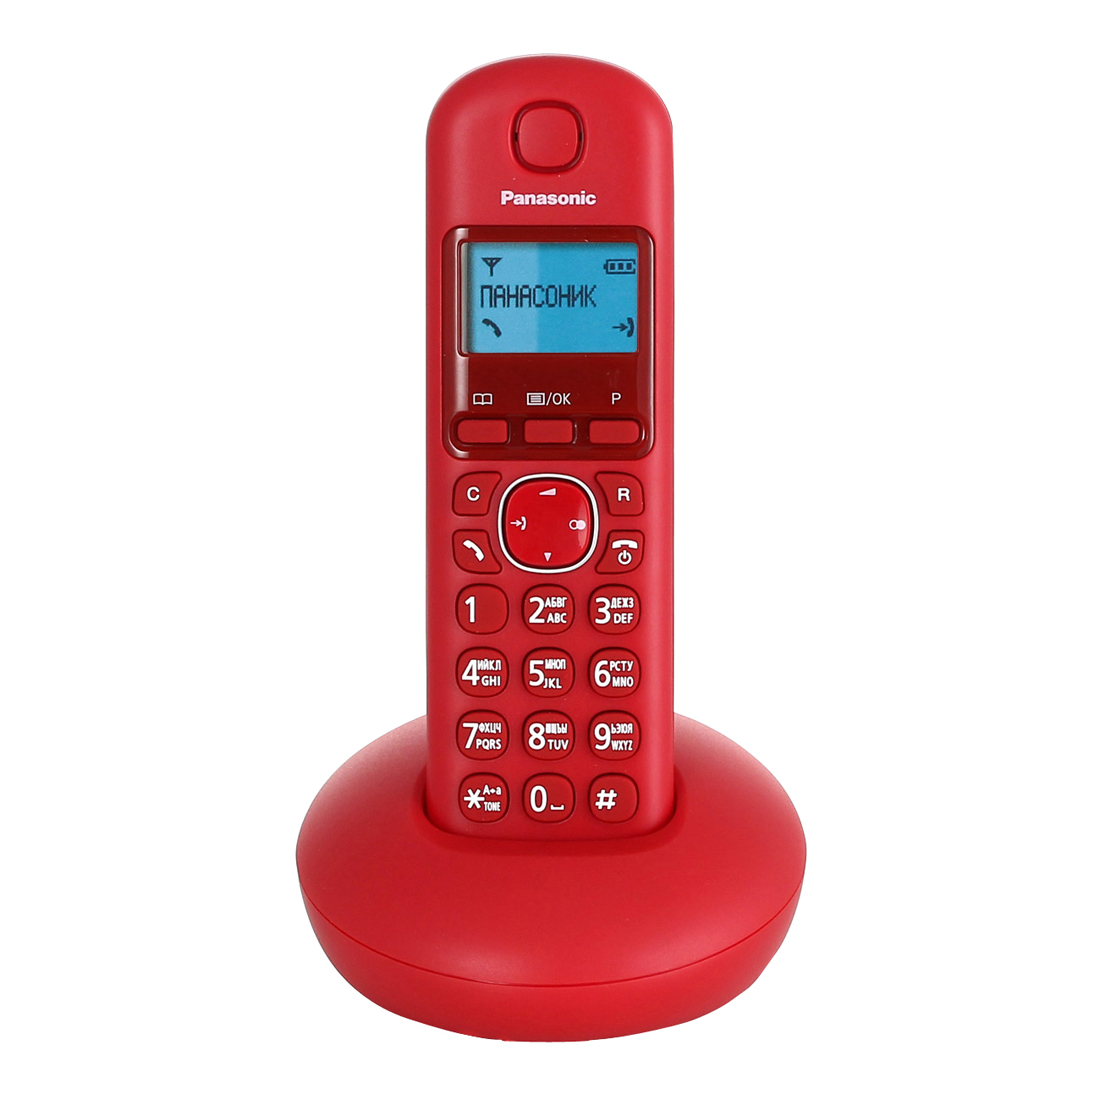 Телефон с радиотрубкой. Панасоник 210 радиотелефон красный. Panasonic KX-tgb210. Panasonic KX-tgb210rur. Panasonic KX-tgb210ruf.